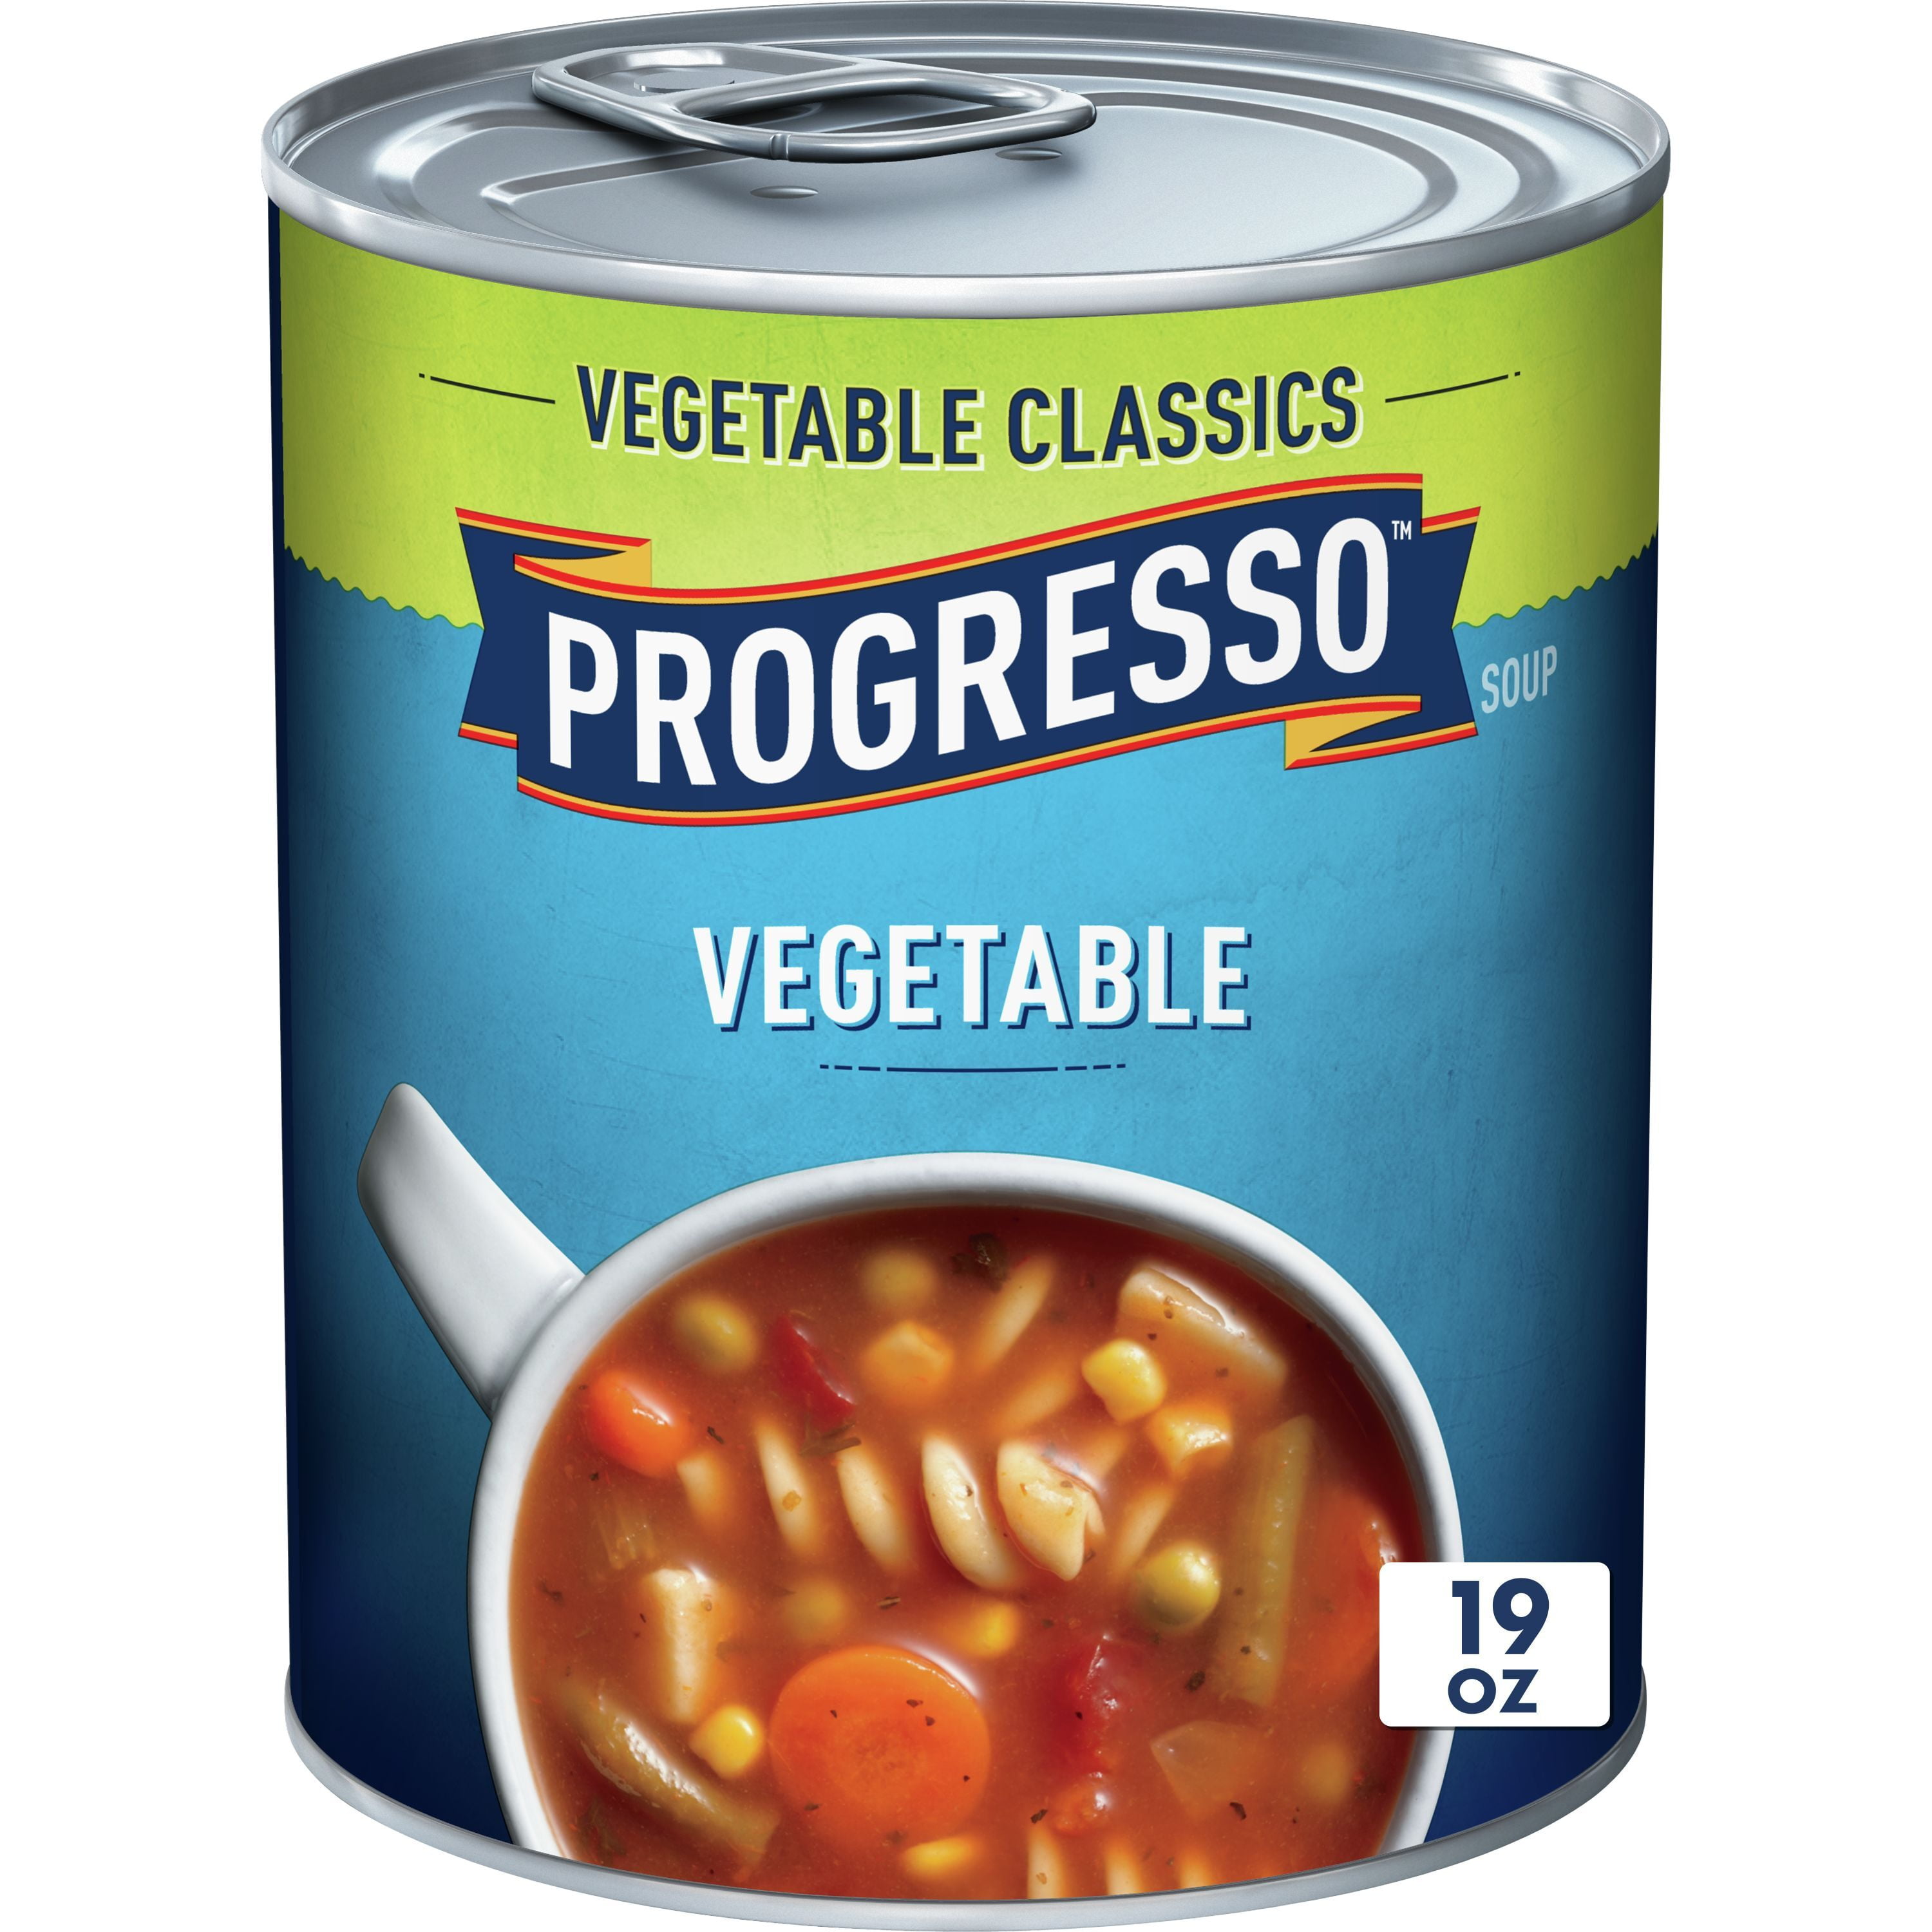 Progresso Vegetable Classics, Vegetable Canned Soup, 19 oz.